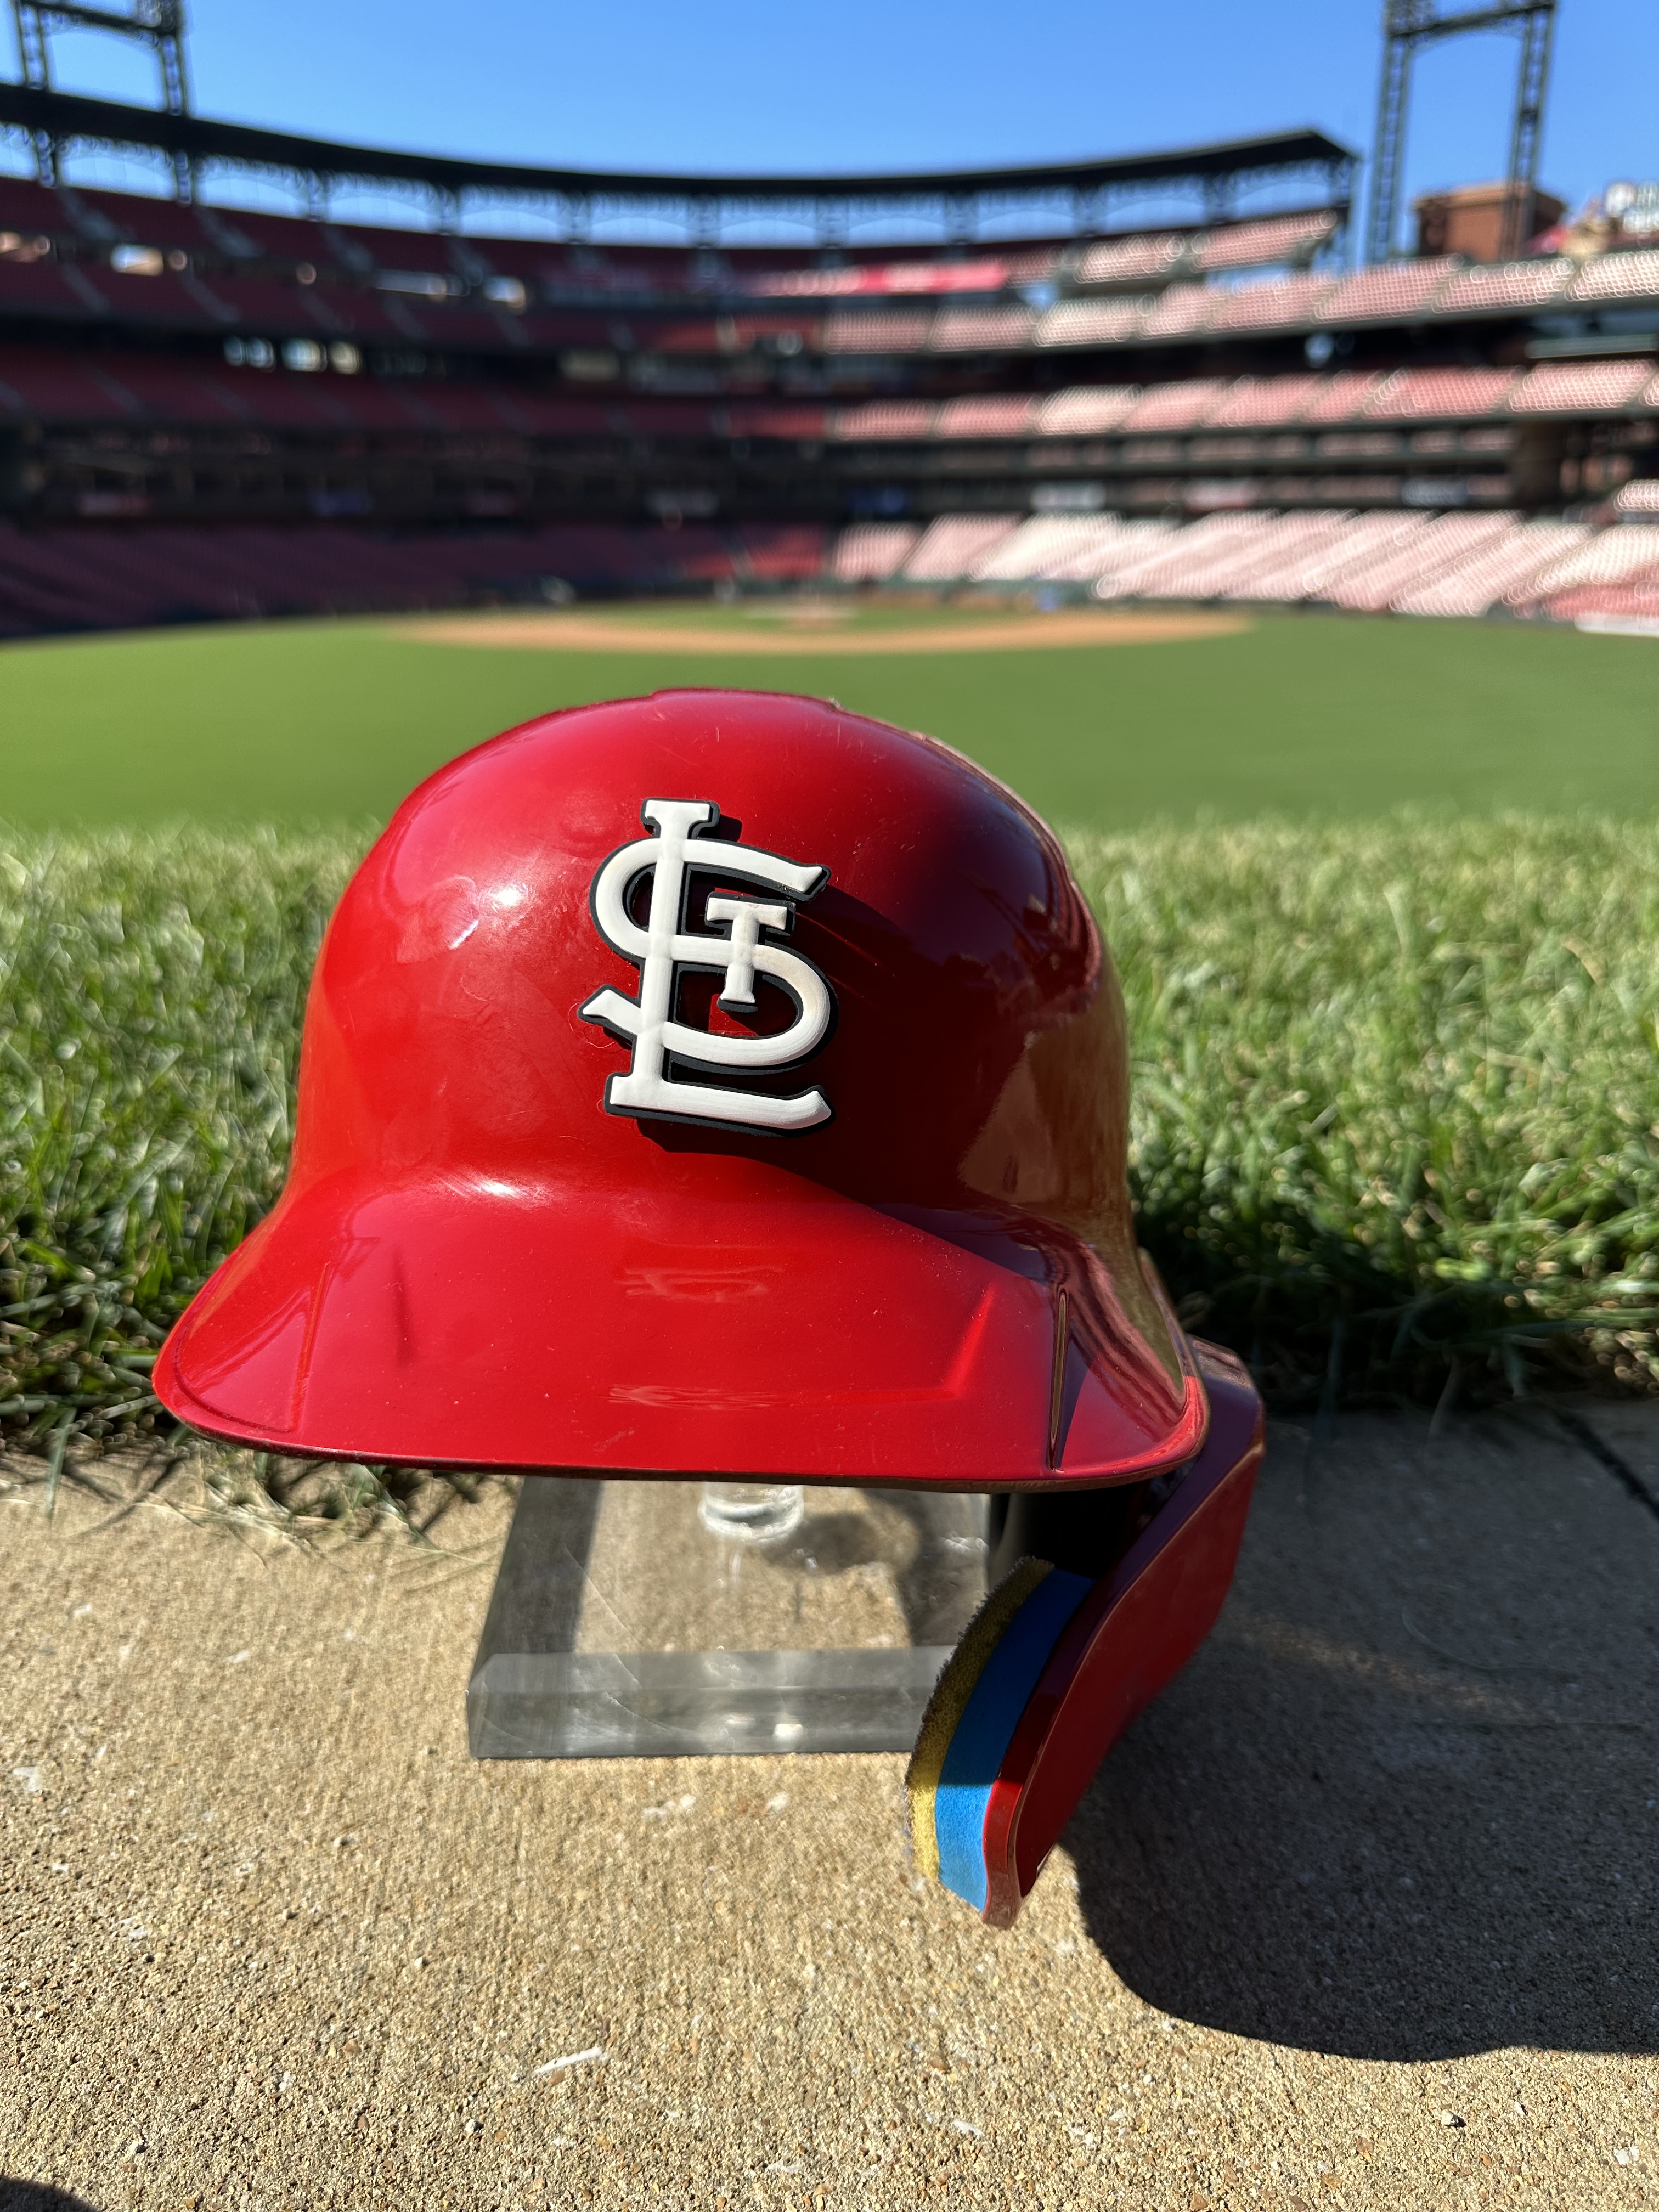 Cardinals Authentics: Masyn Winn Debut Game Used Helmet